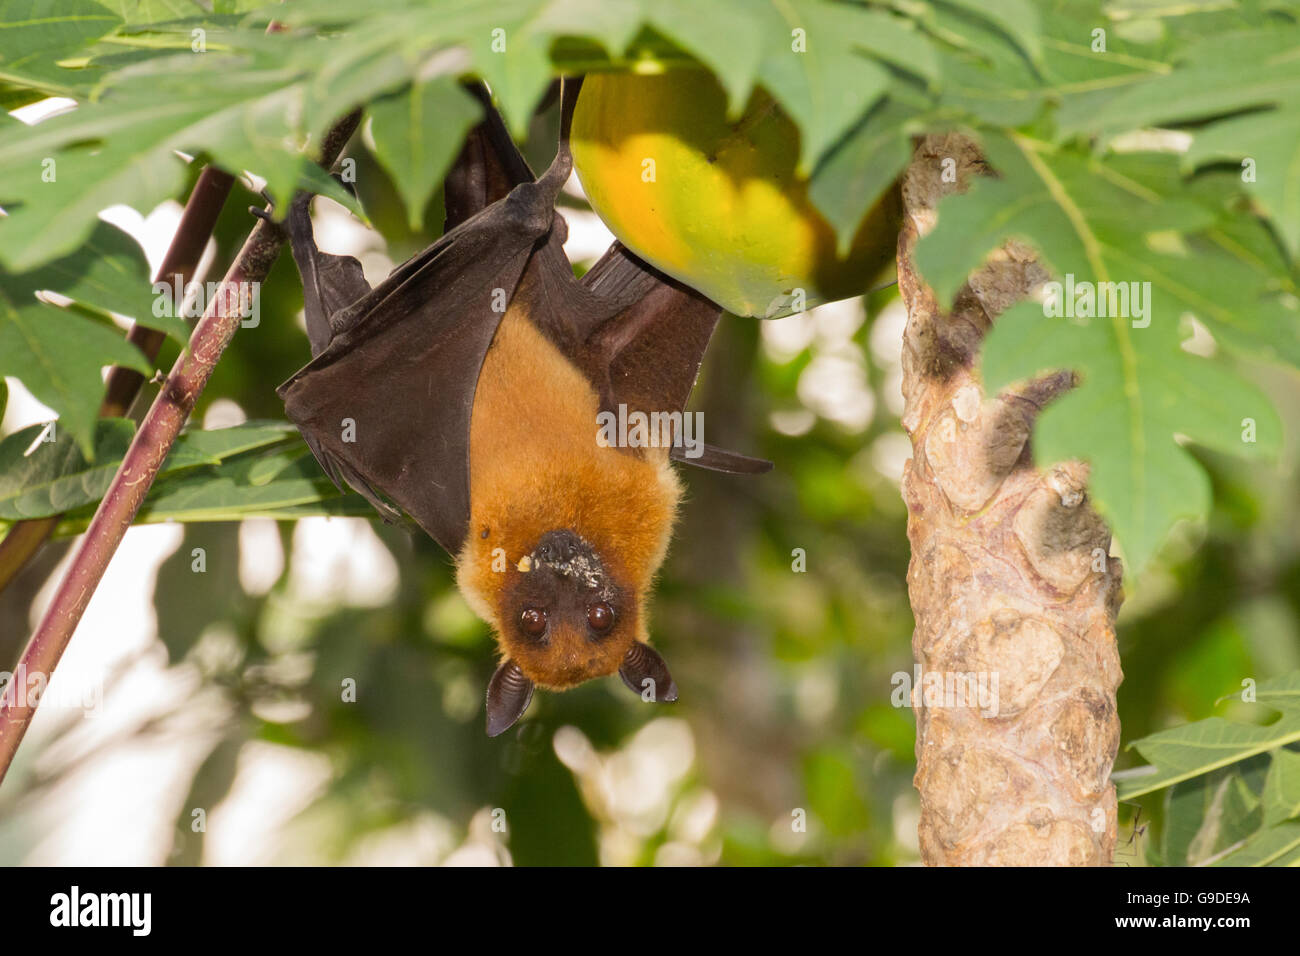 Indian fruit bat Foto de stock